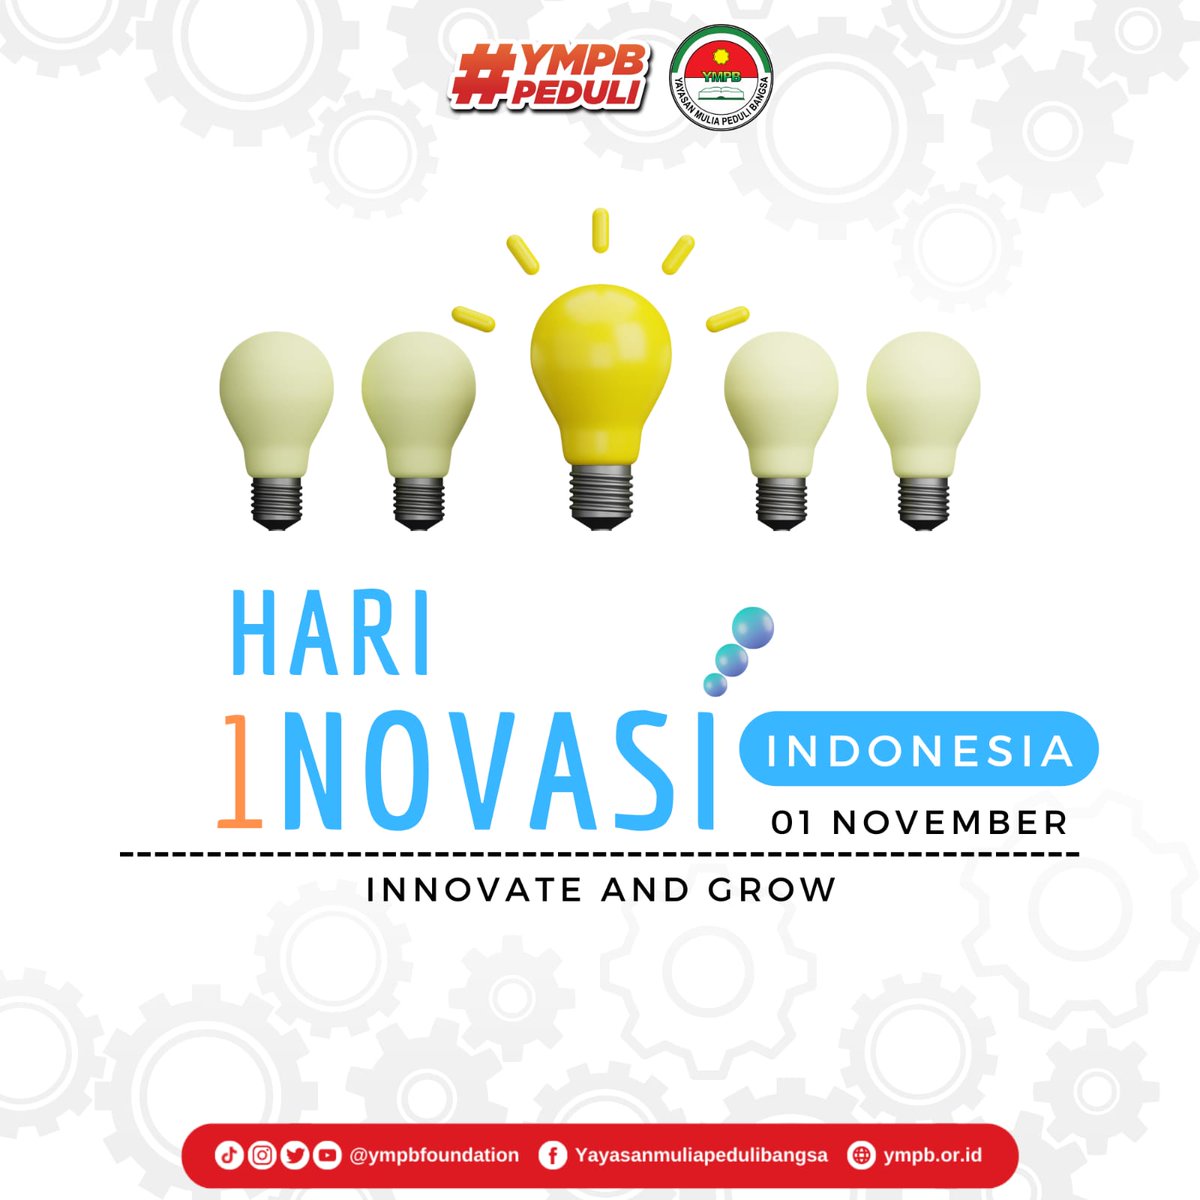 Selamat Hari Inovasi Indonesia 2022, selagi inovasi tidak berhenti maka generasi unggul tidak akan pernah mati #HariInovasi #InovationDay #InovasiIndonesia2022 #HariInovasiIndonesia #YMPBPEDULI